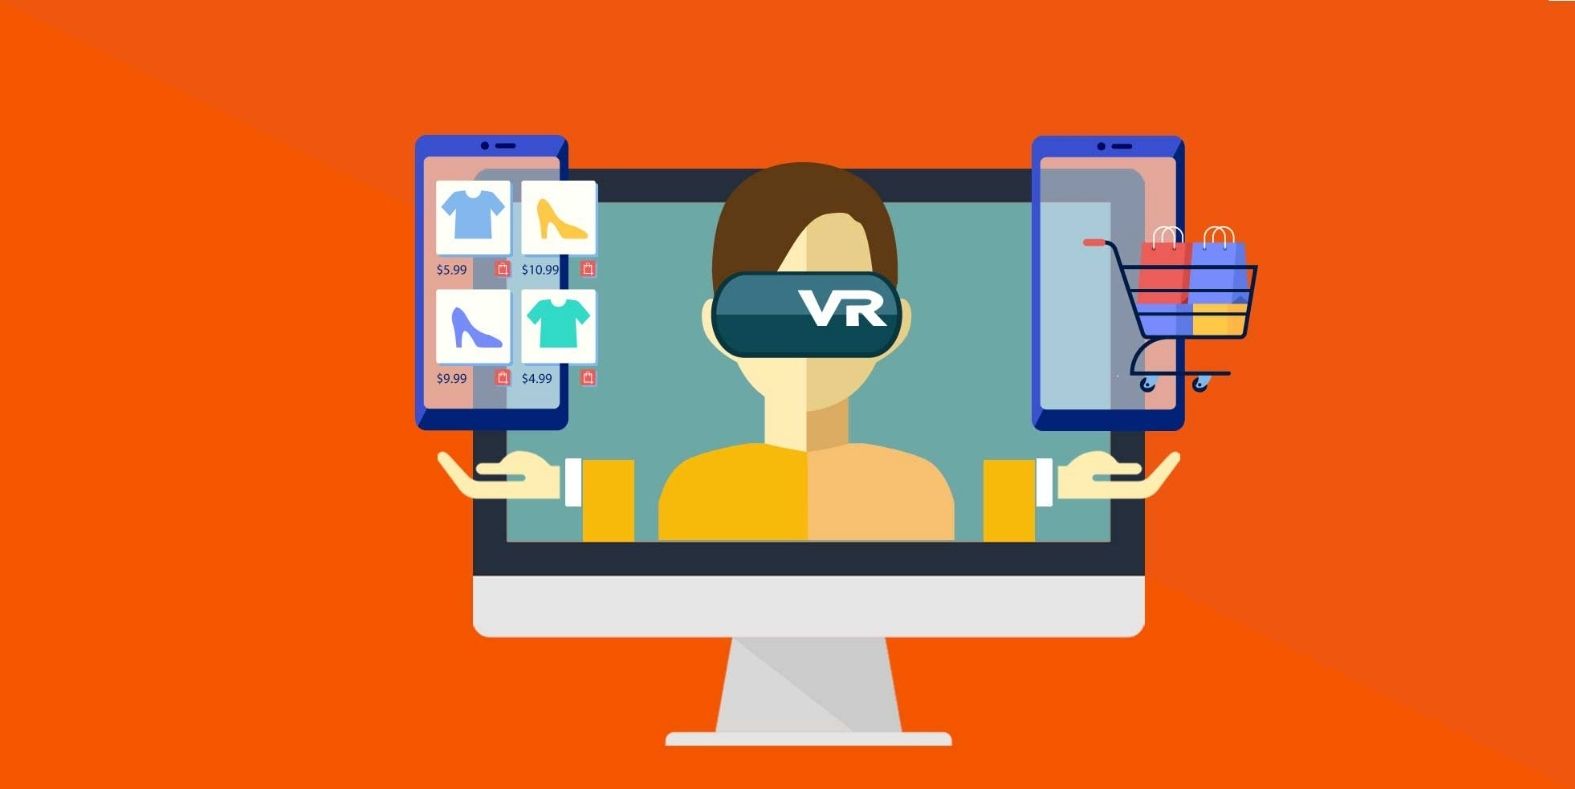 Le tecnologie AR VR e MR